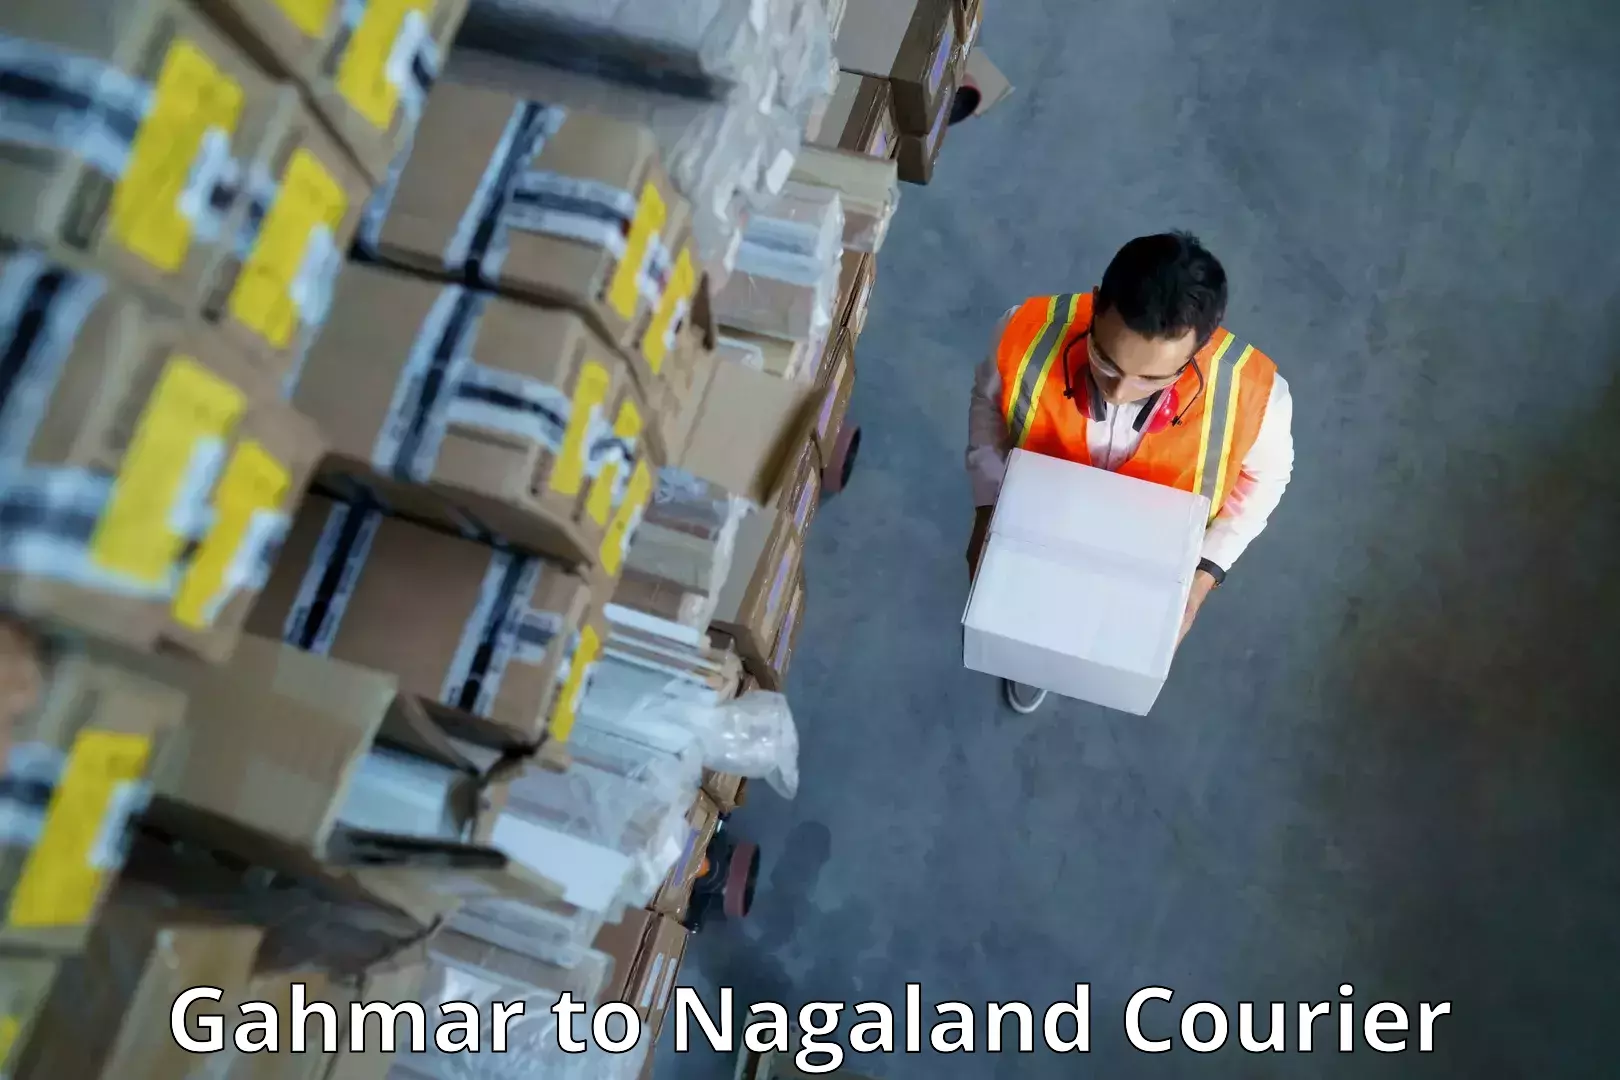 Reliable logistics providers Gahmar to Mon